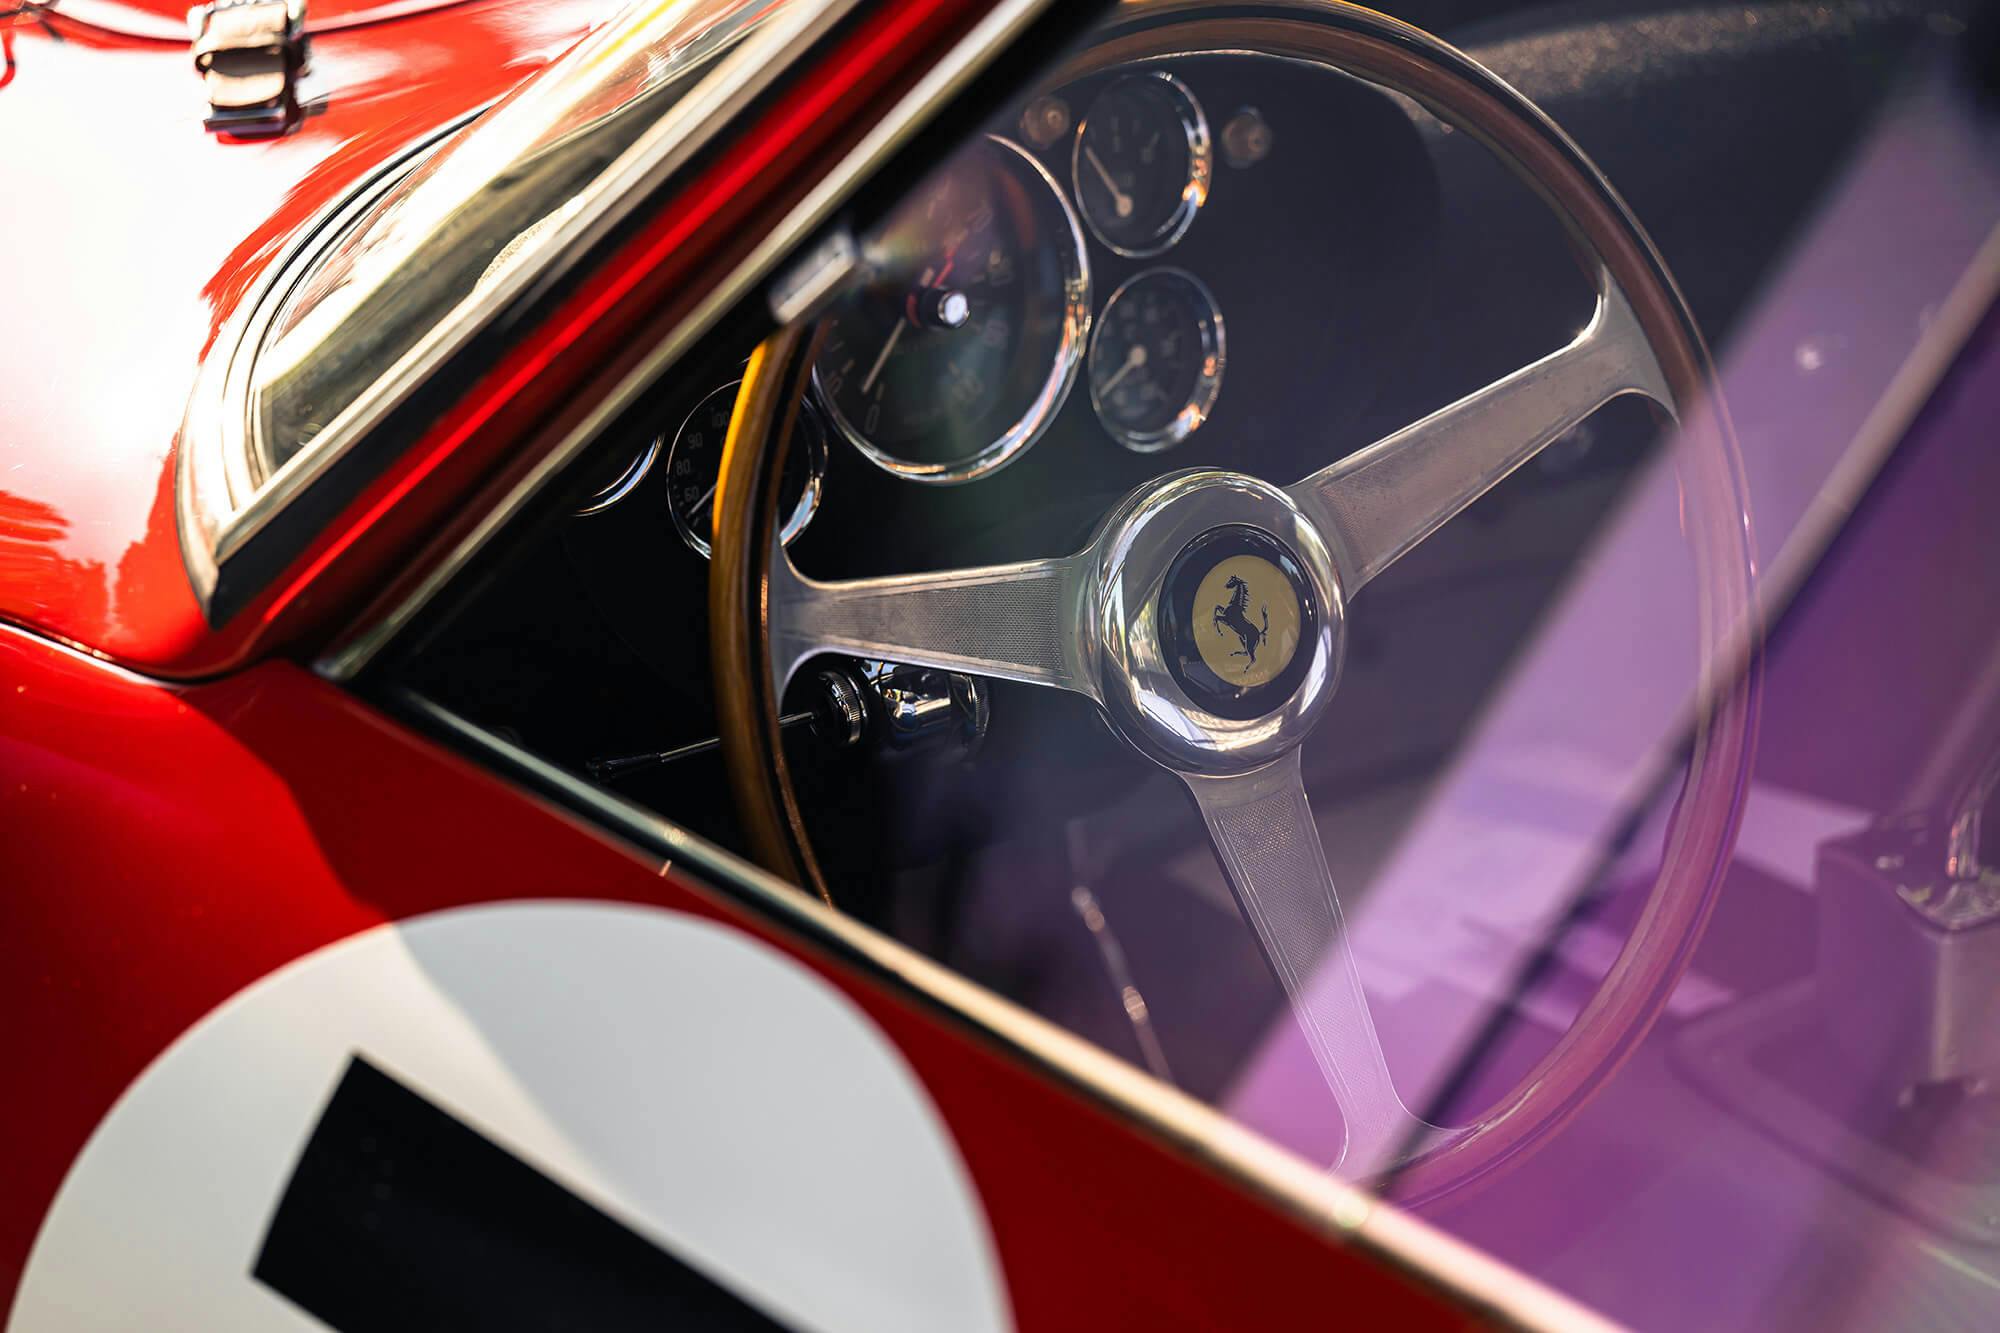 Ferrari 330LM 250 GTO interior steering wheel through glass